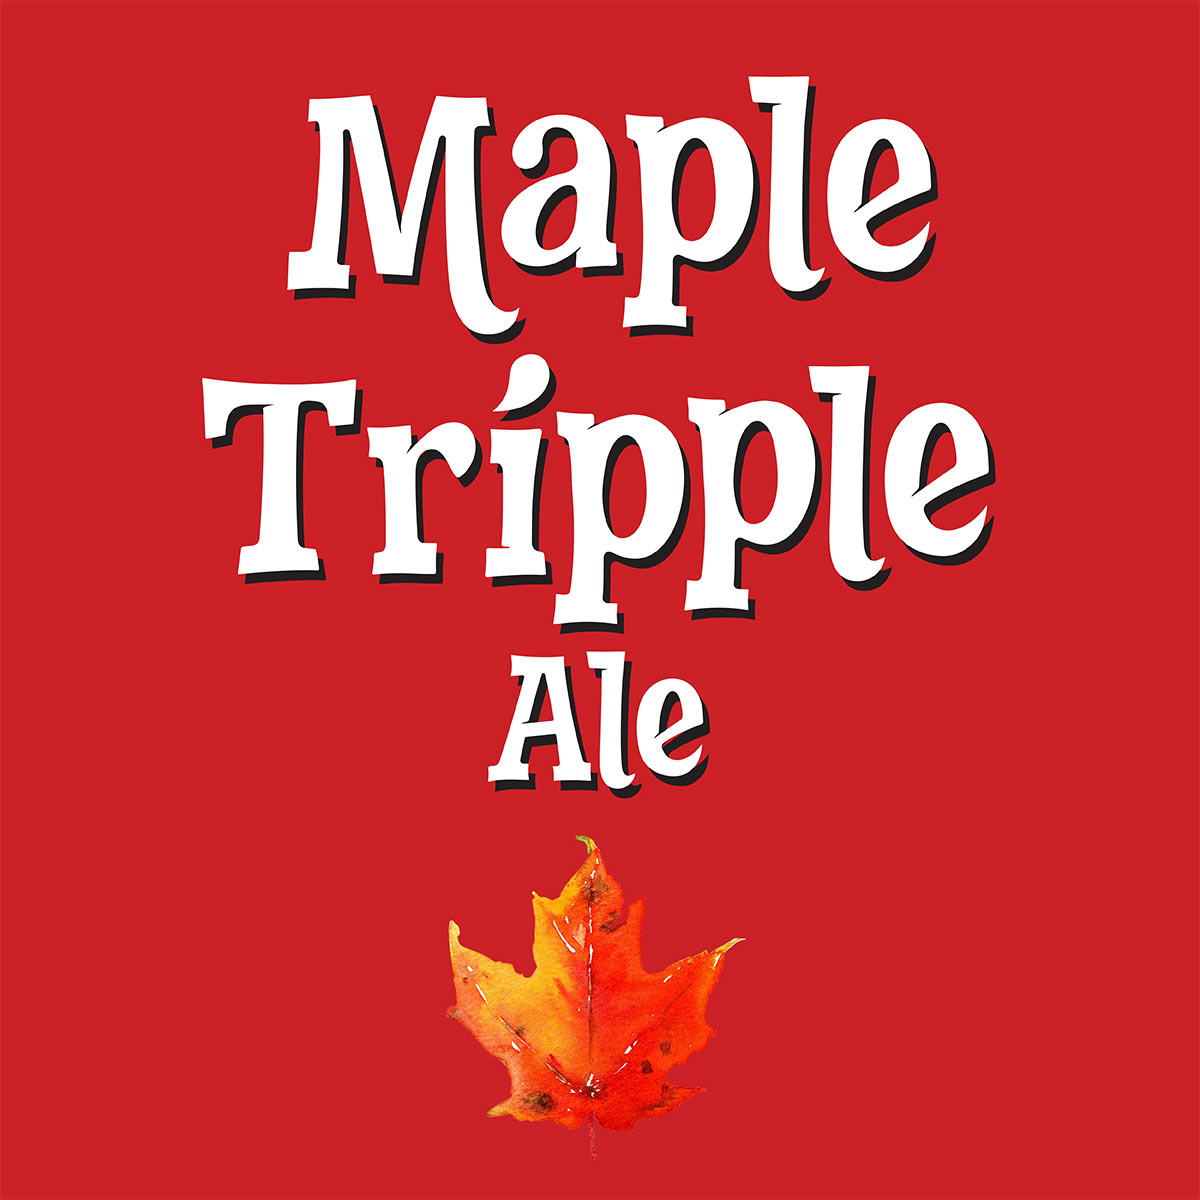 Maple Tripple Ale